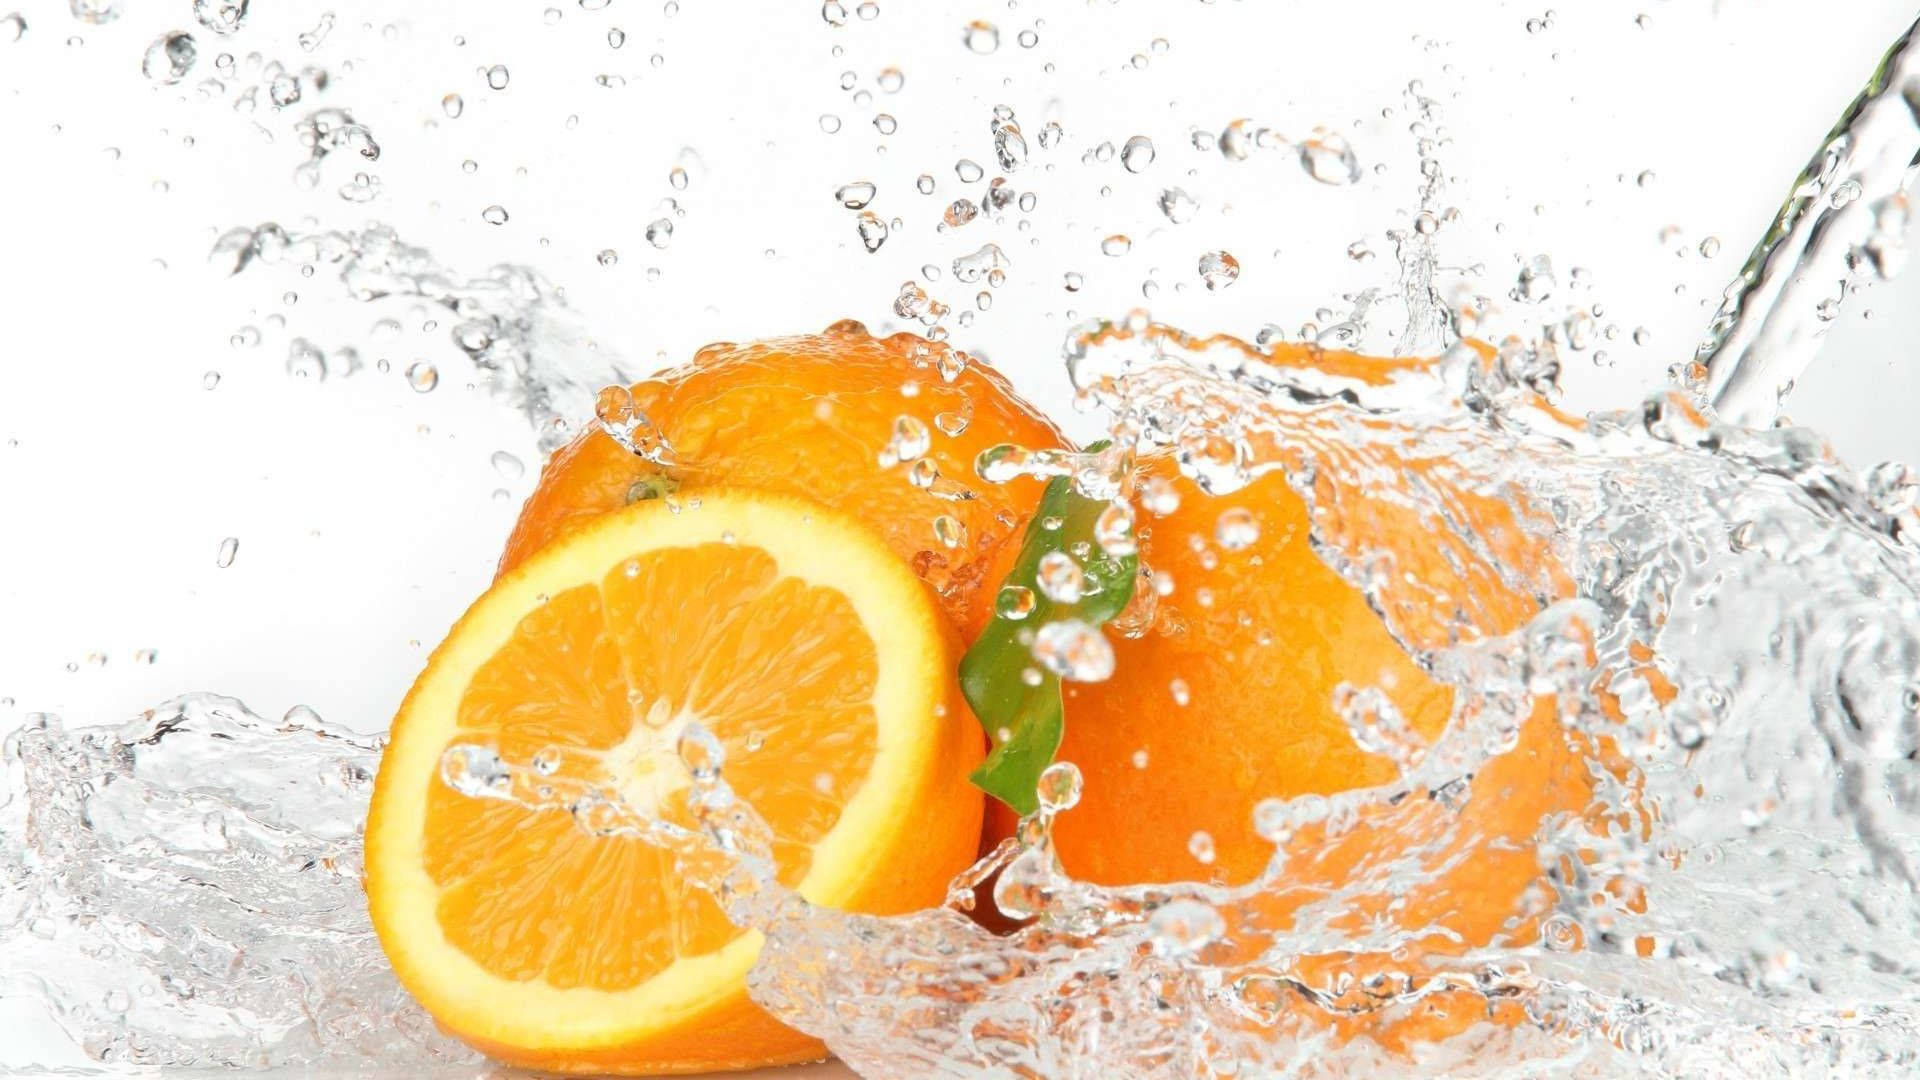 Orange Fruits In Water Background